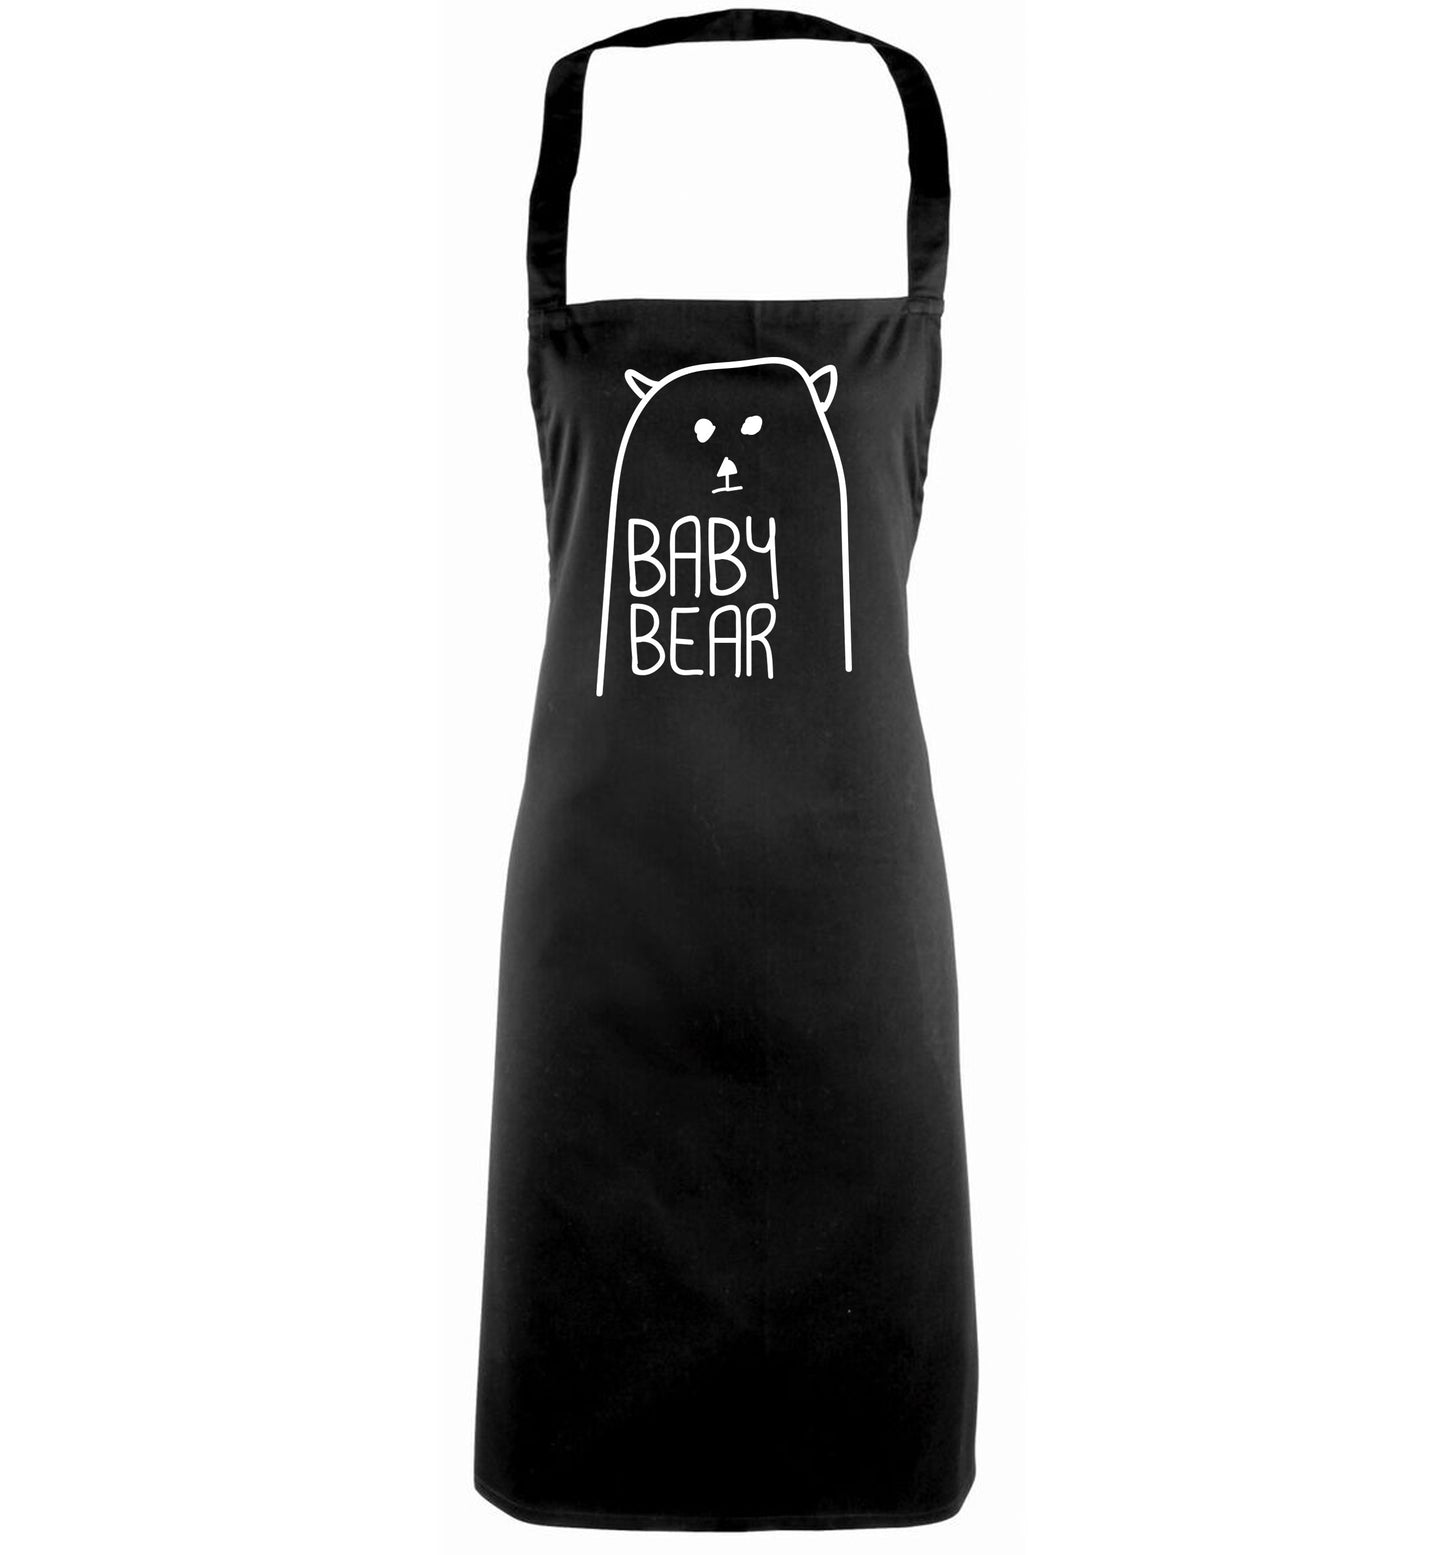 Baby bear black apron